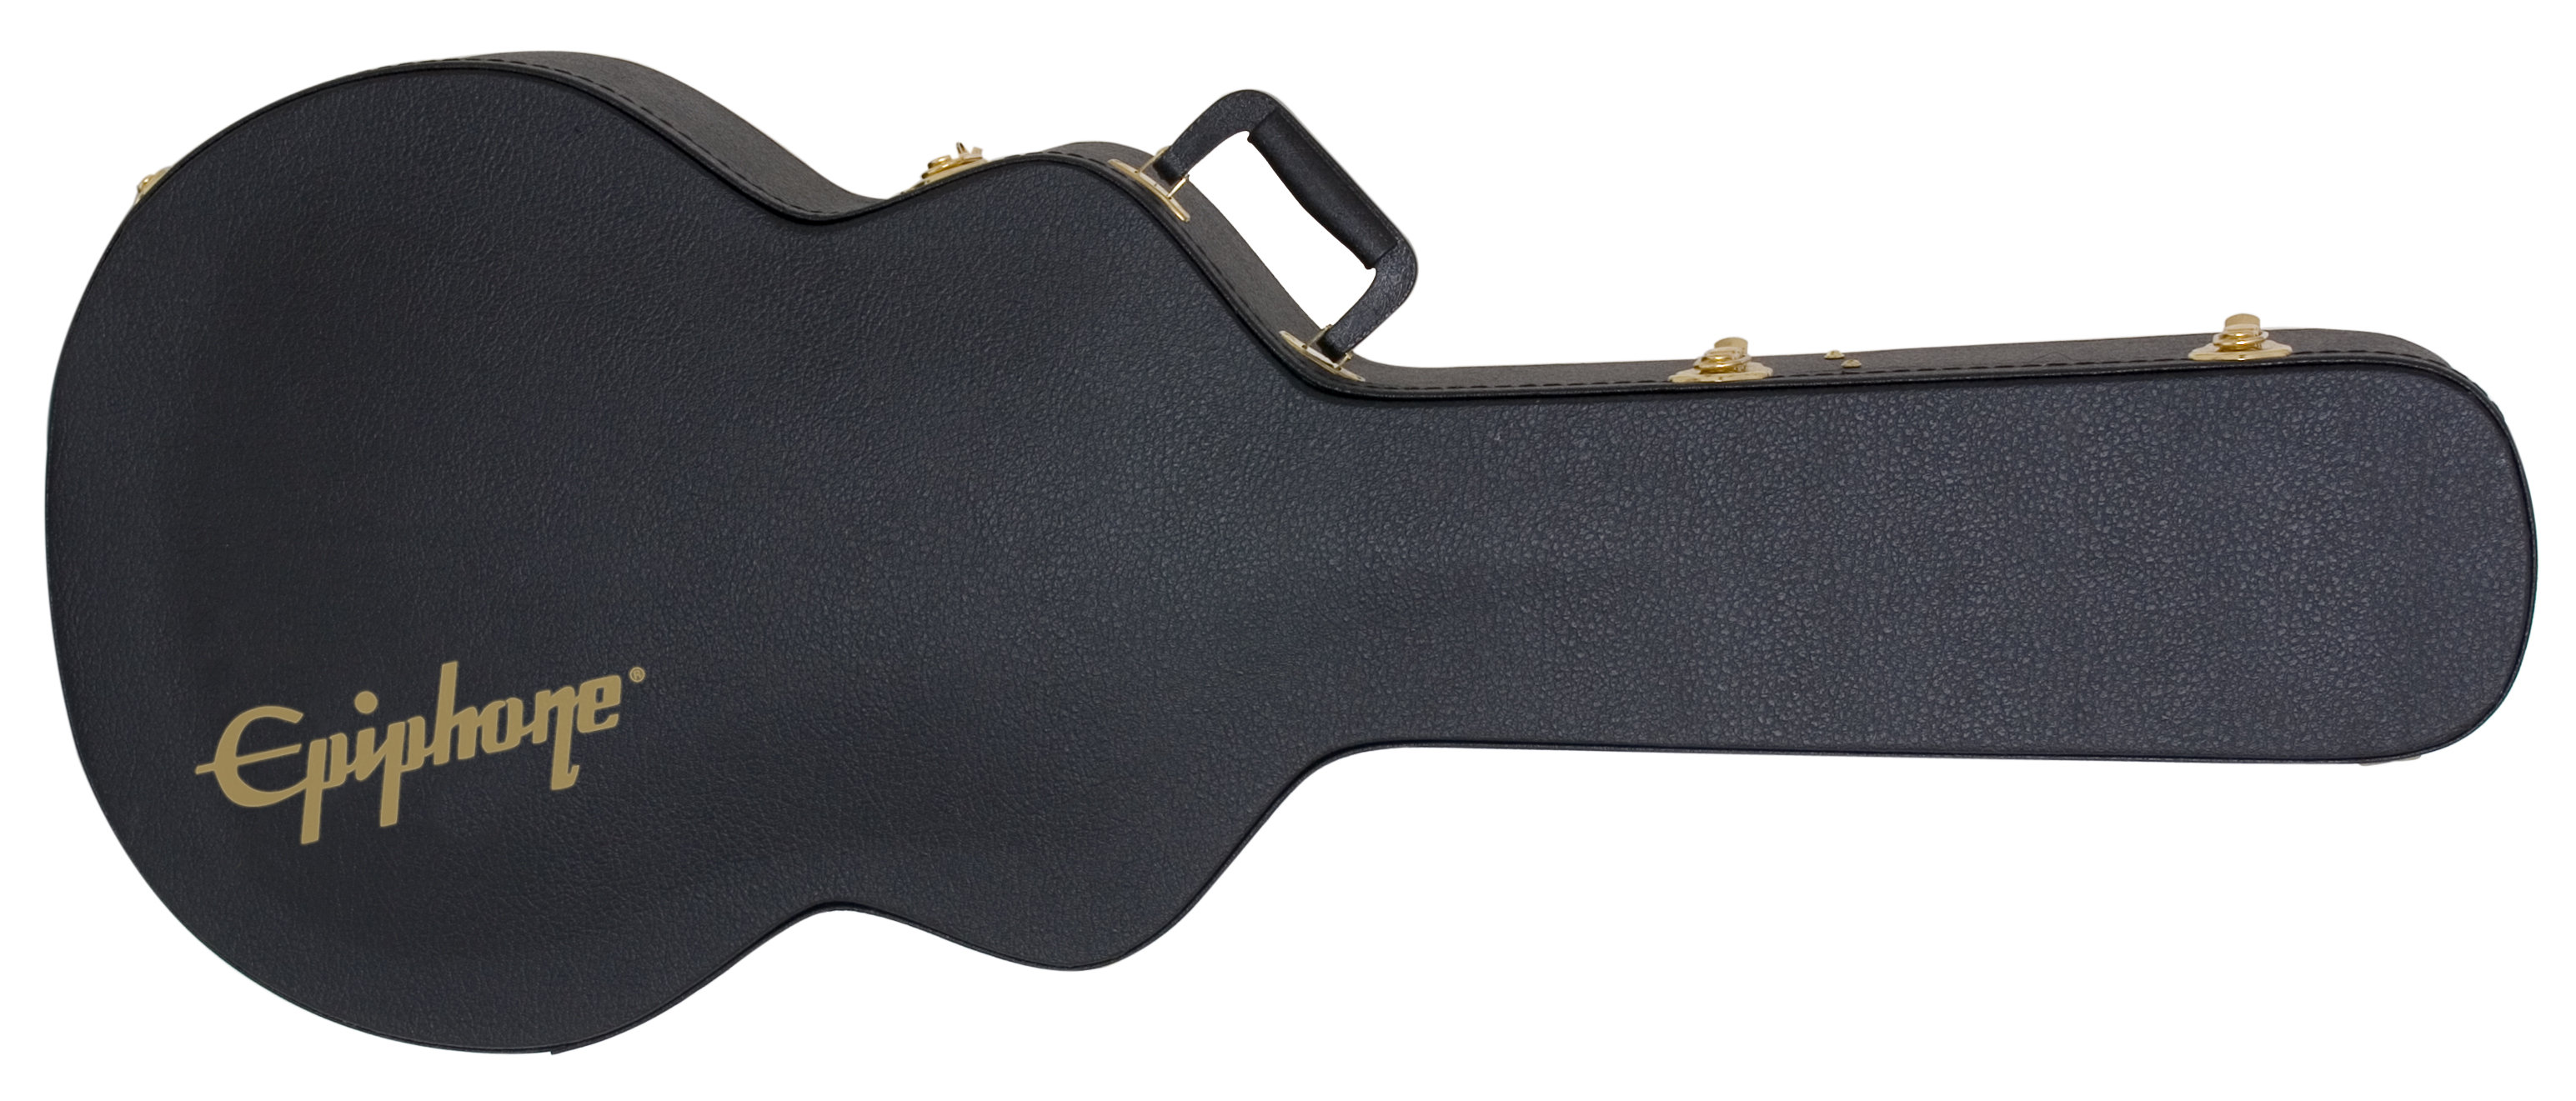 Epiphone Guitar Case